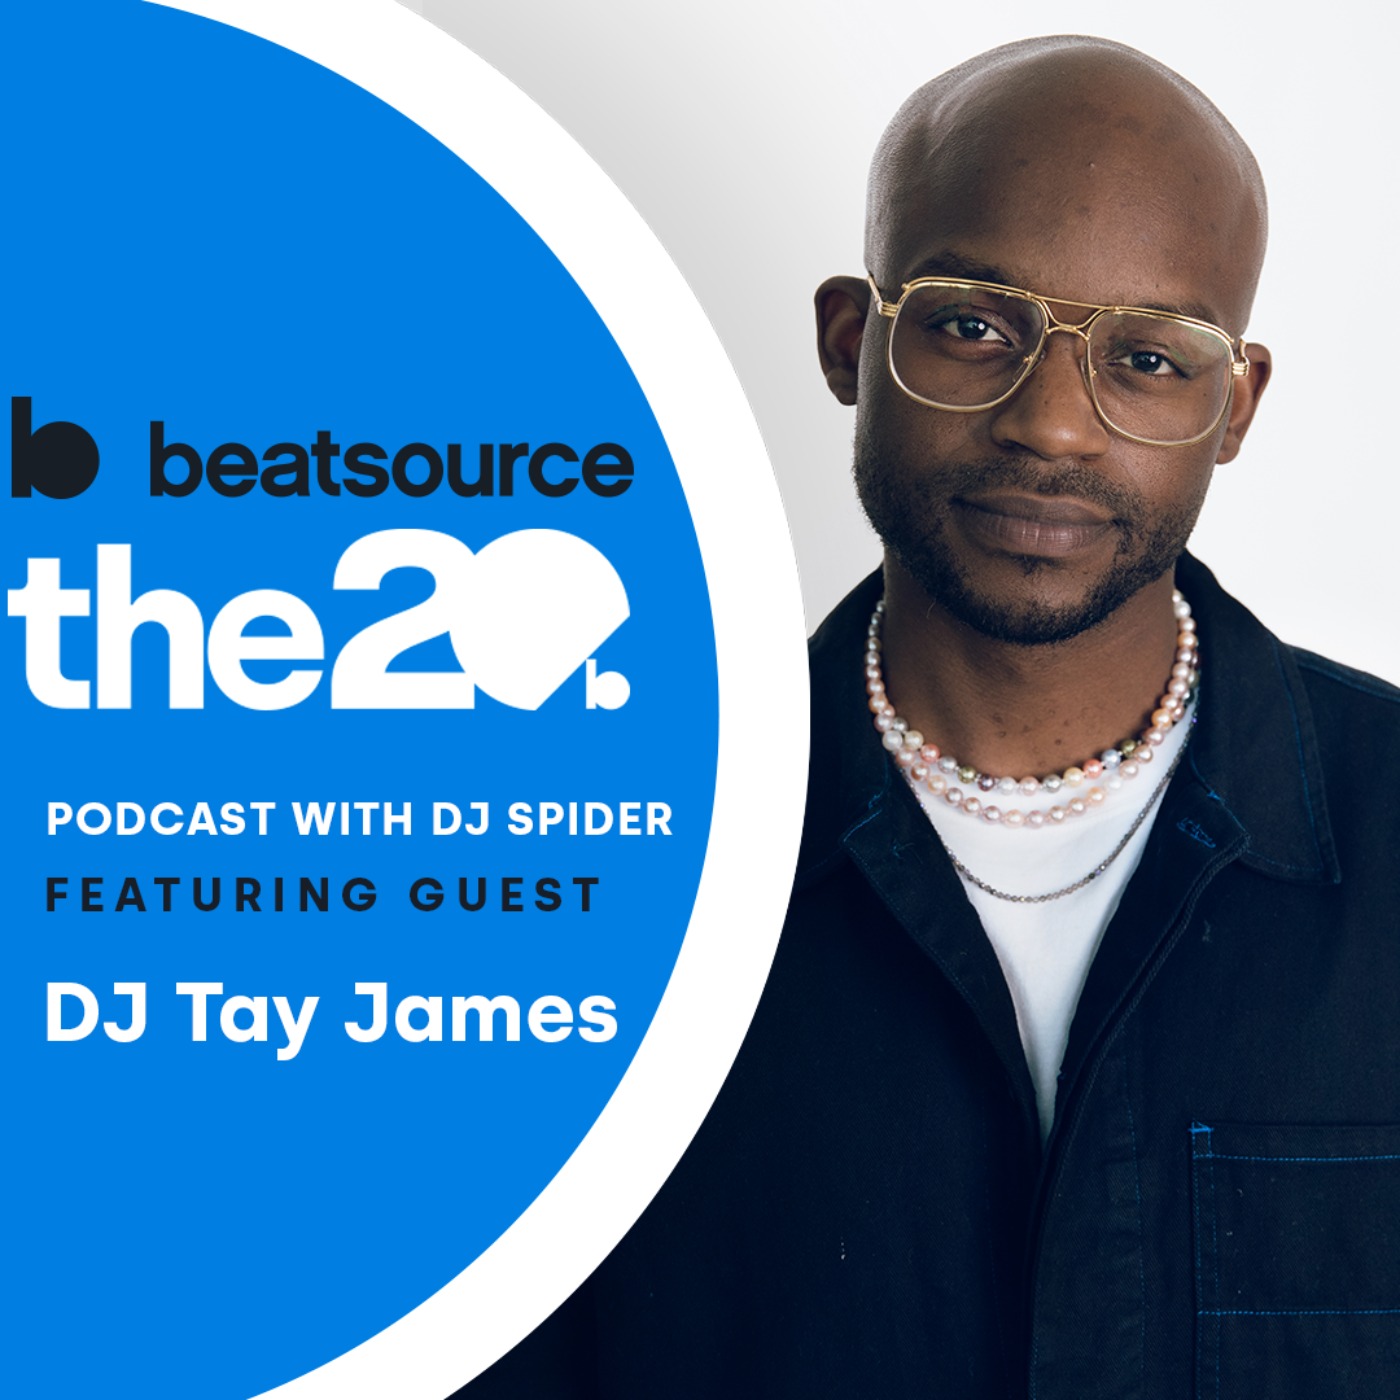 DJ Tay James